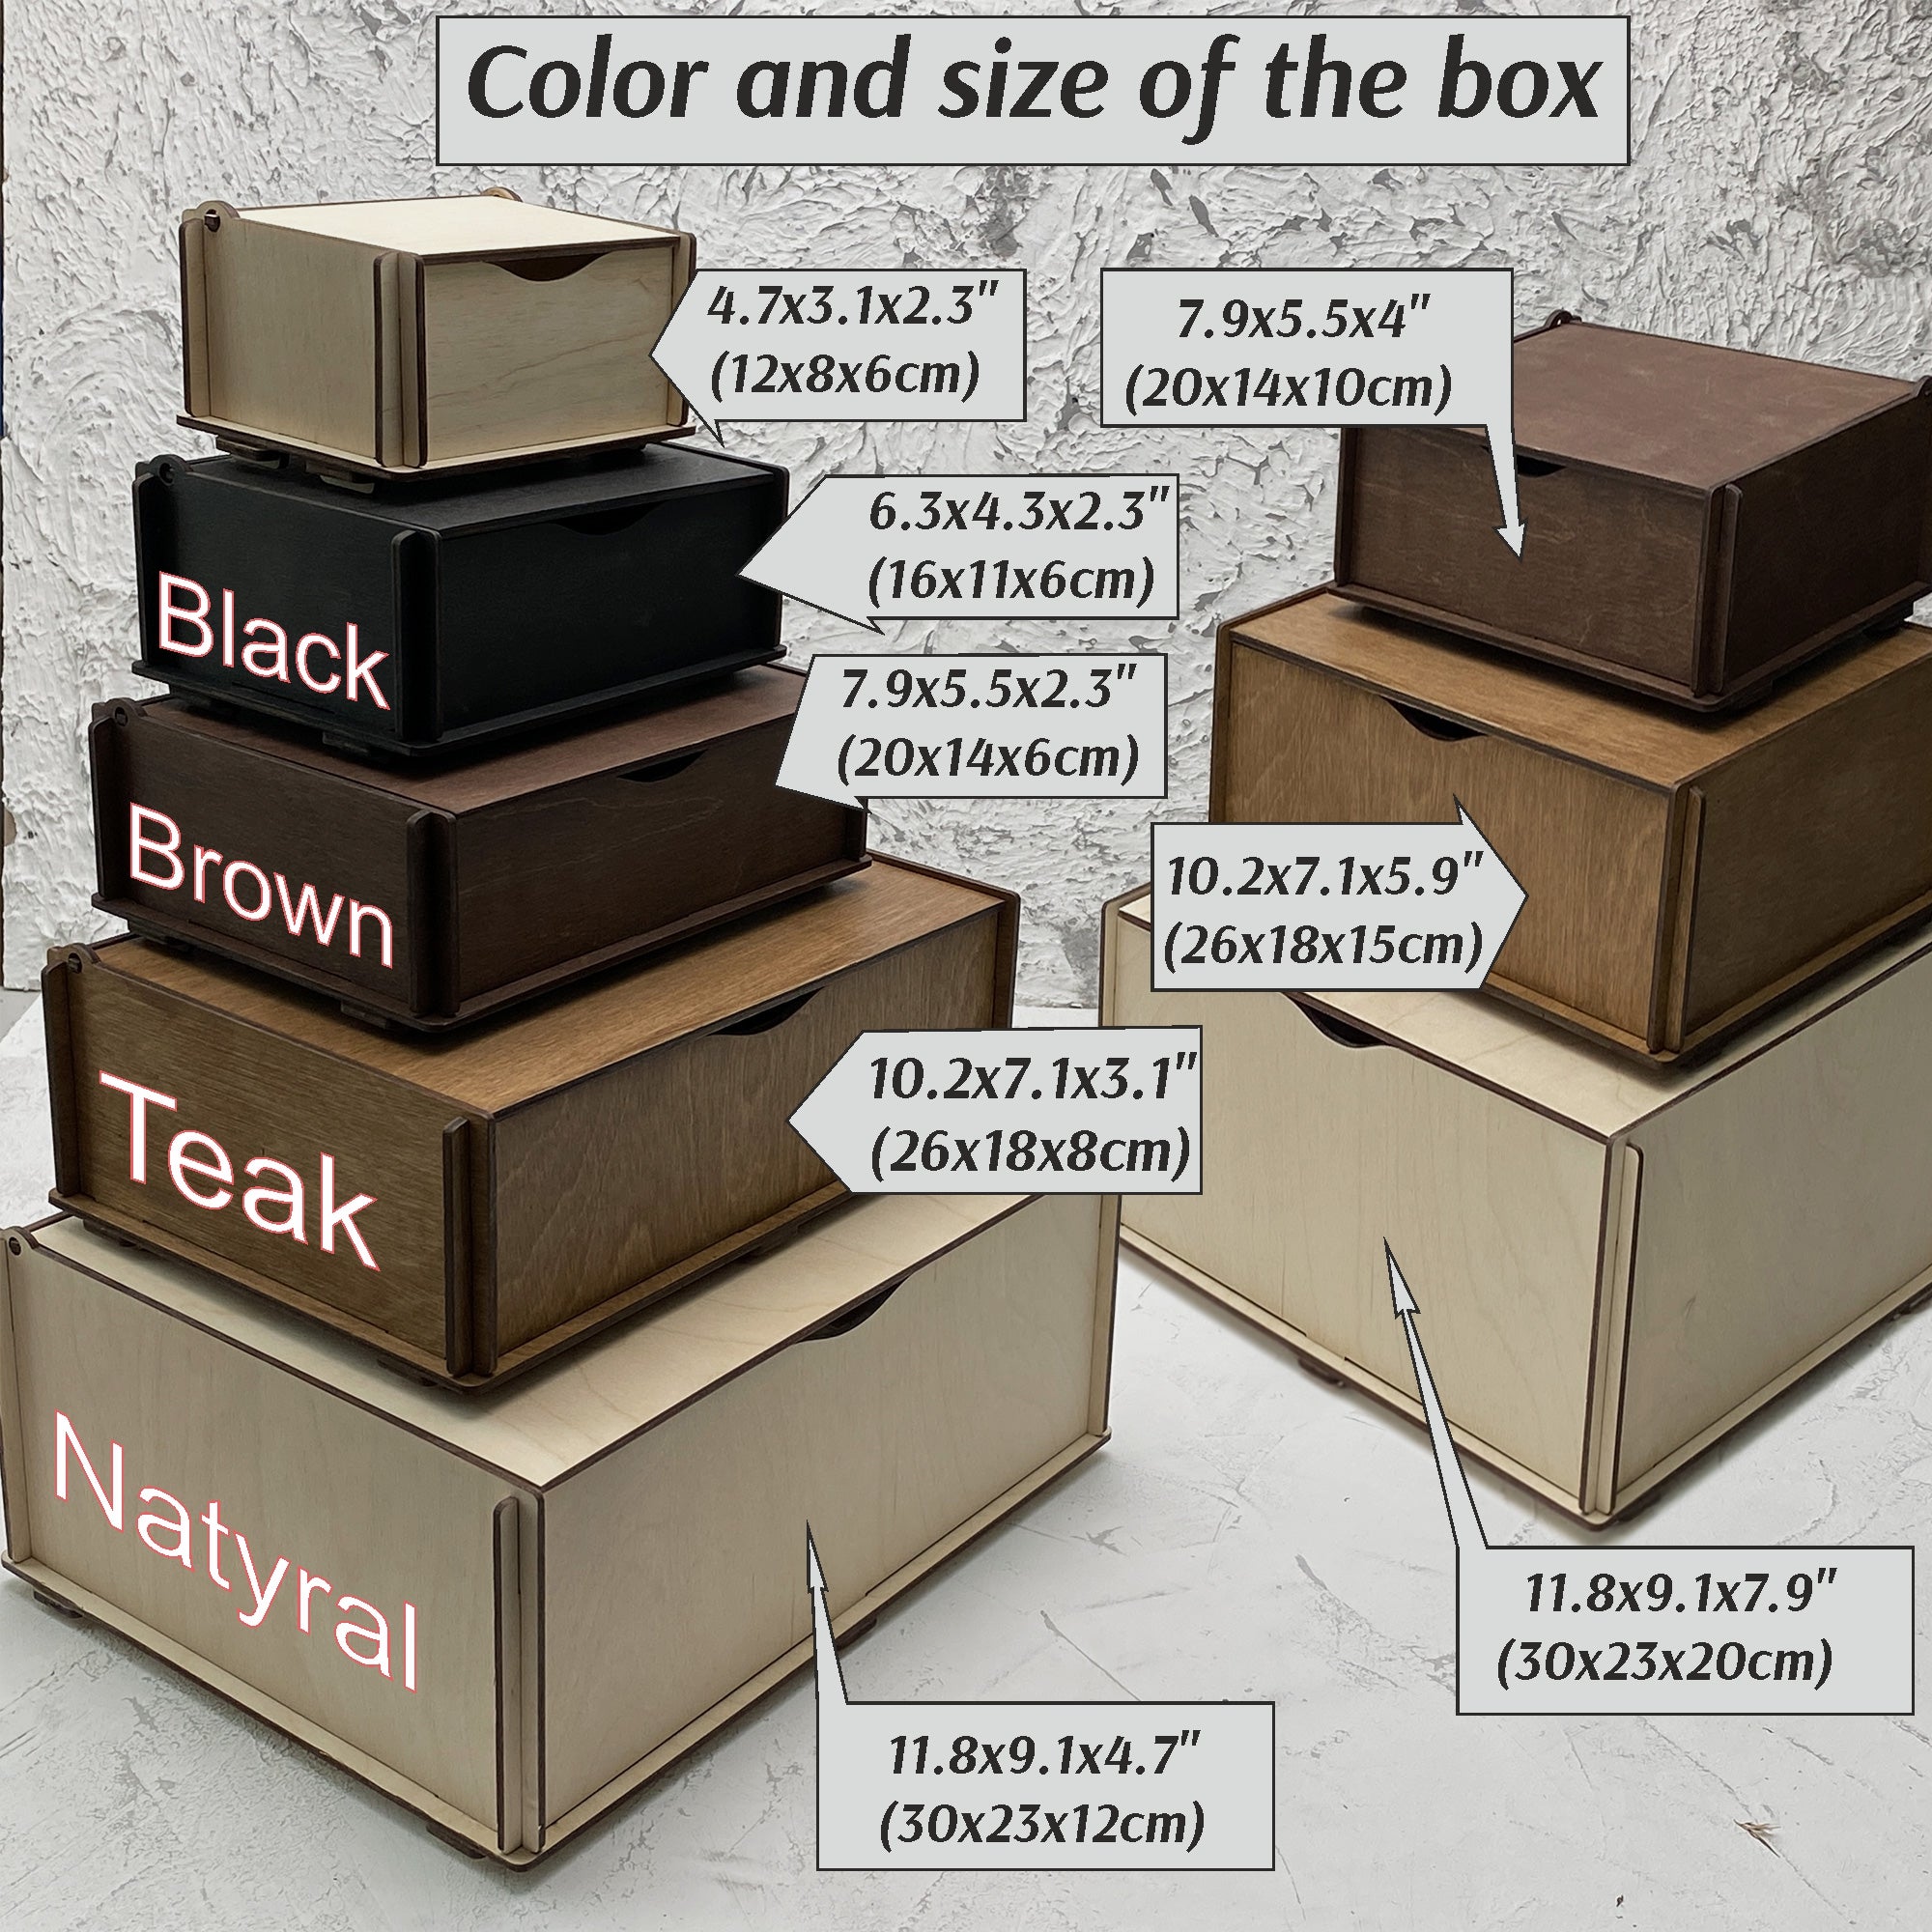 Wooden memory box